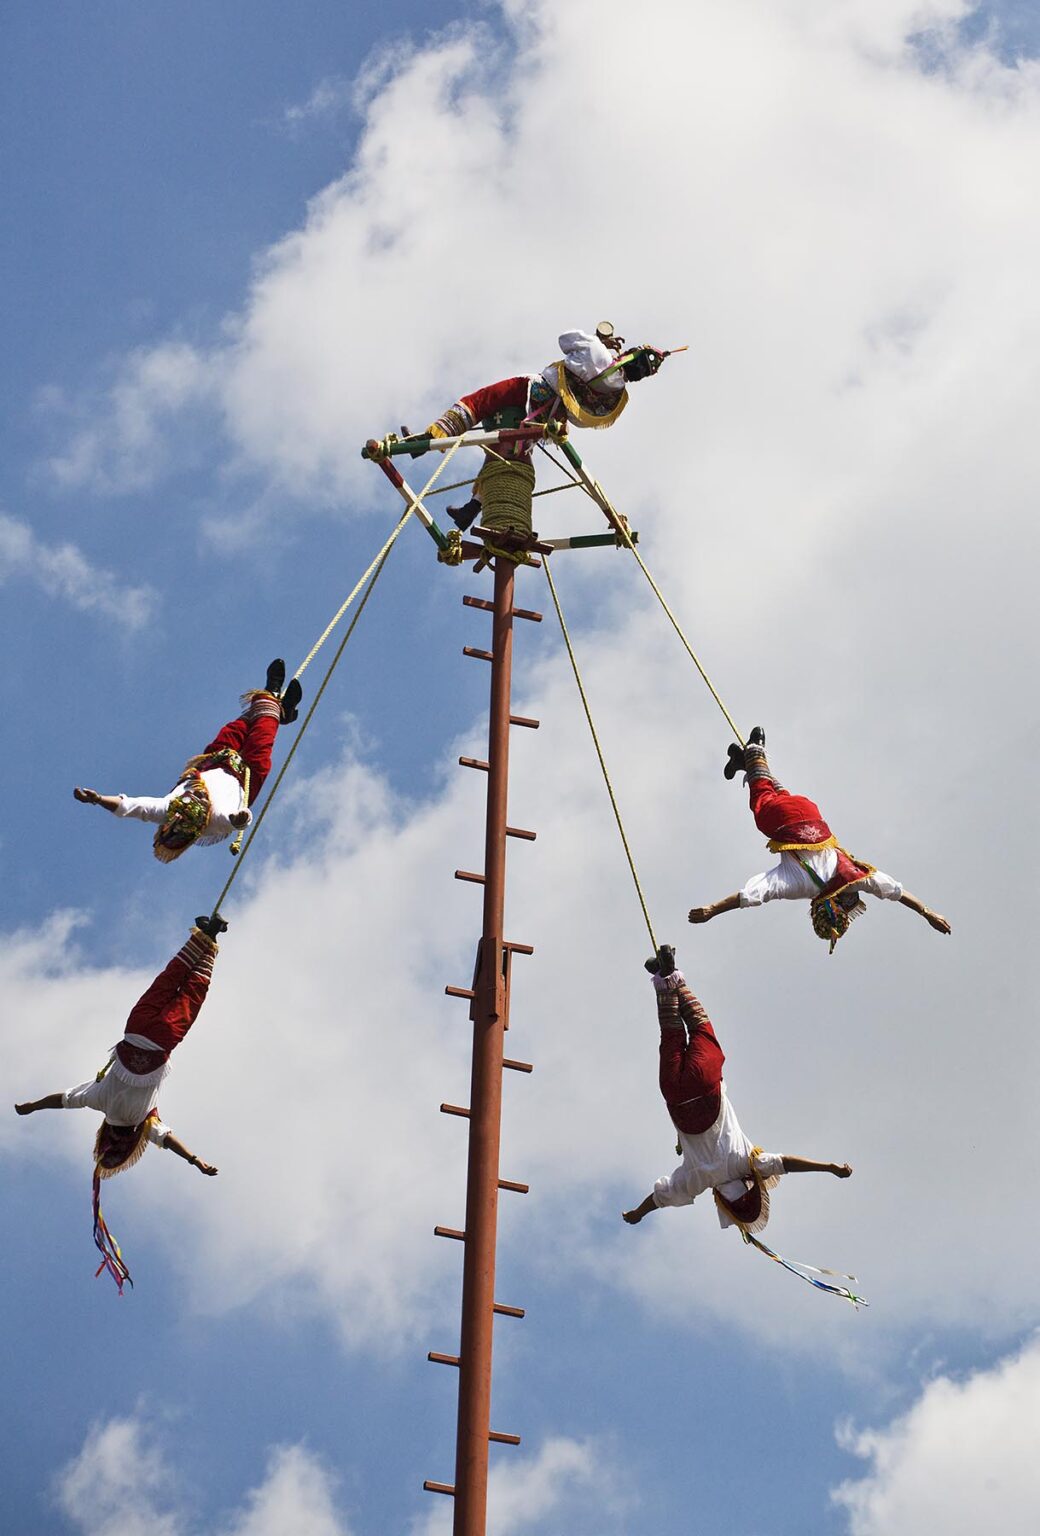 The EL TAJIN CEREMONIAL SKY DANCERS from VERACRUZ perform during the INDEPENDENCE DAY FESTIVITIES - SAN MIGUEL DE ALLENDE, MEXICO